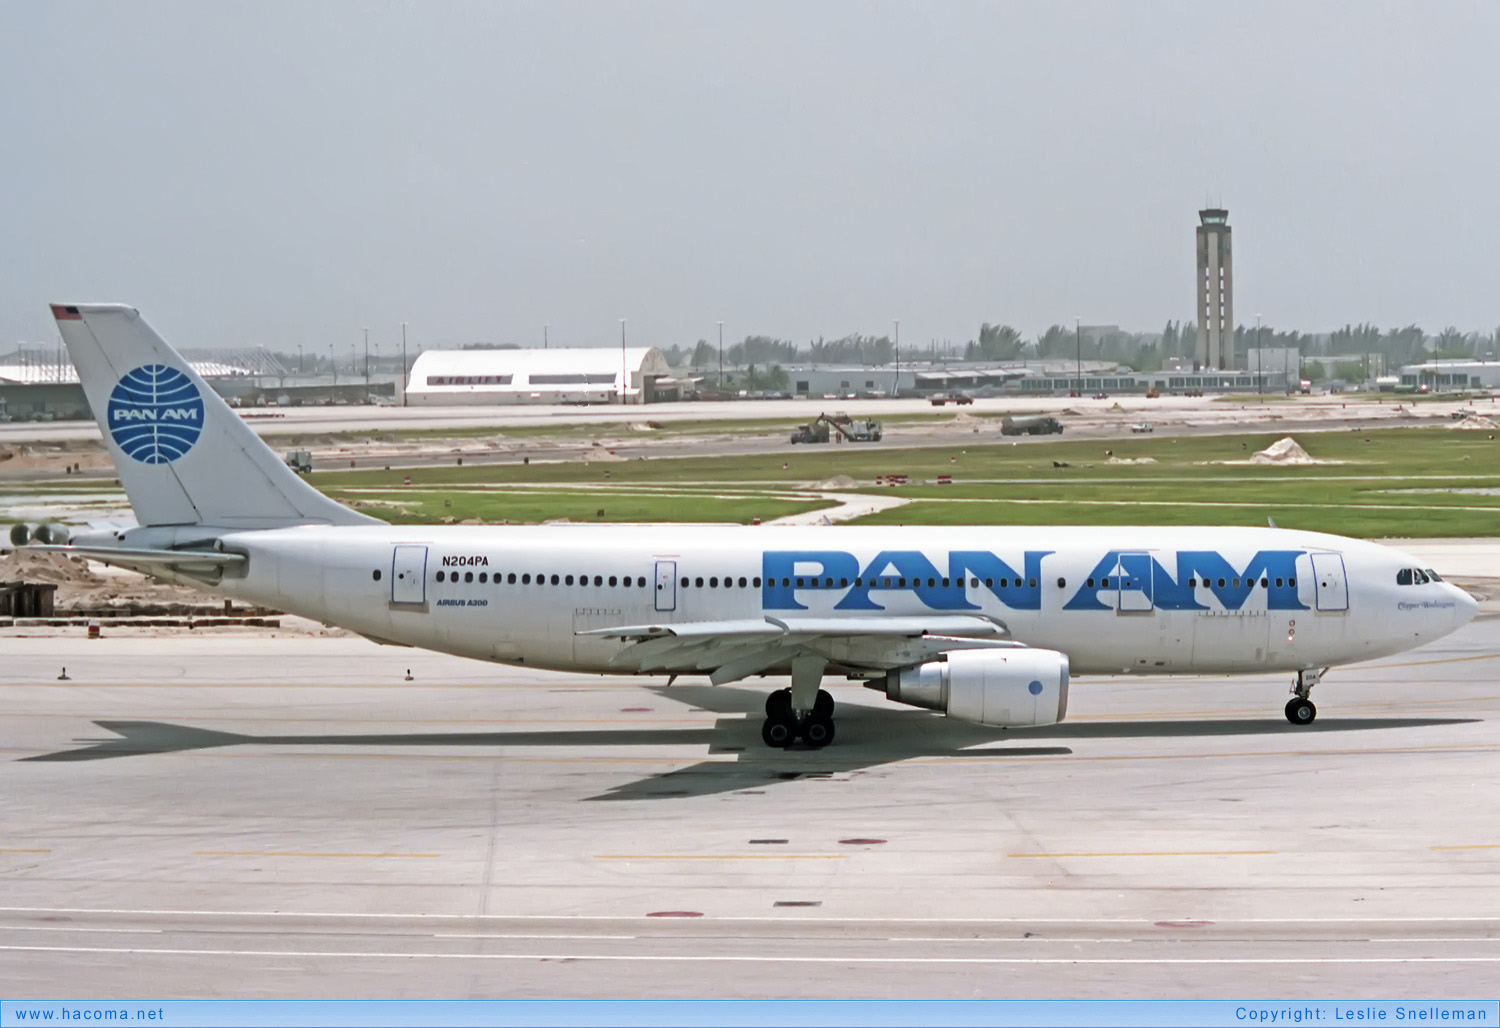 Foto von N204PA - Pan Am Clipper Washington / Costa Rica - Miami International Airport - 30.04.1986